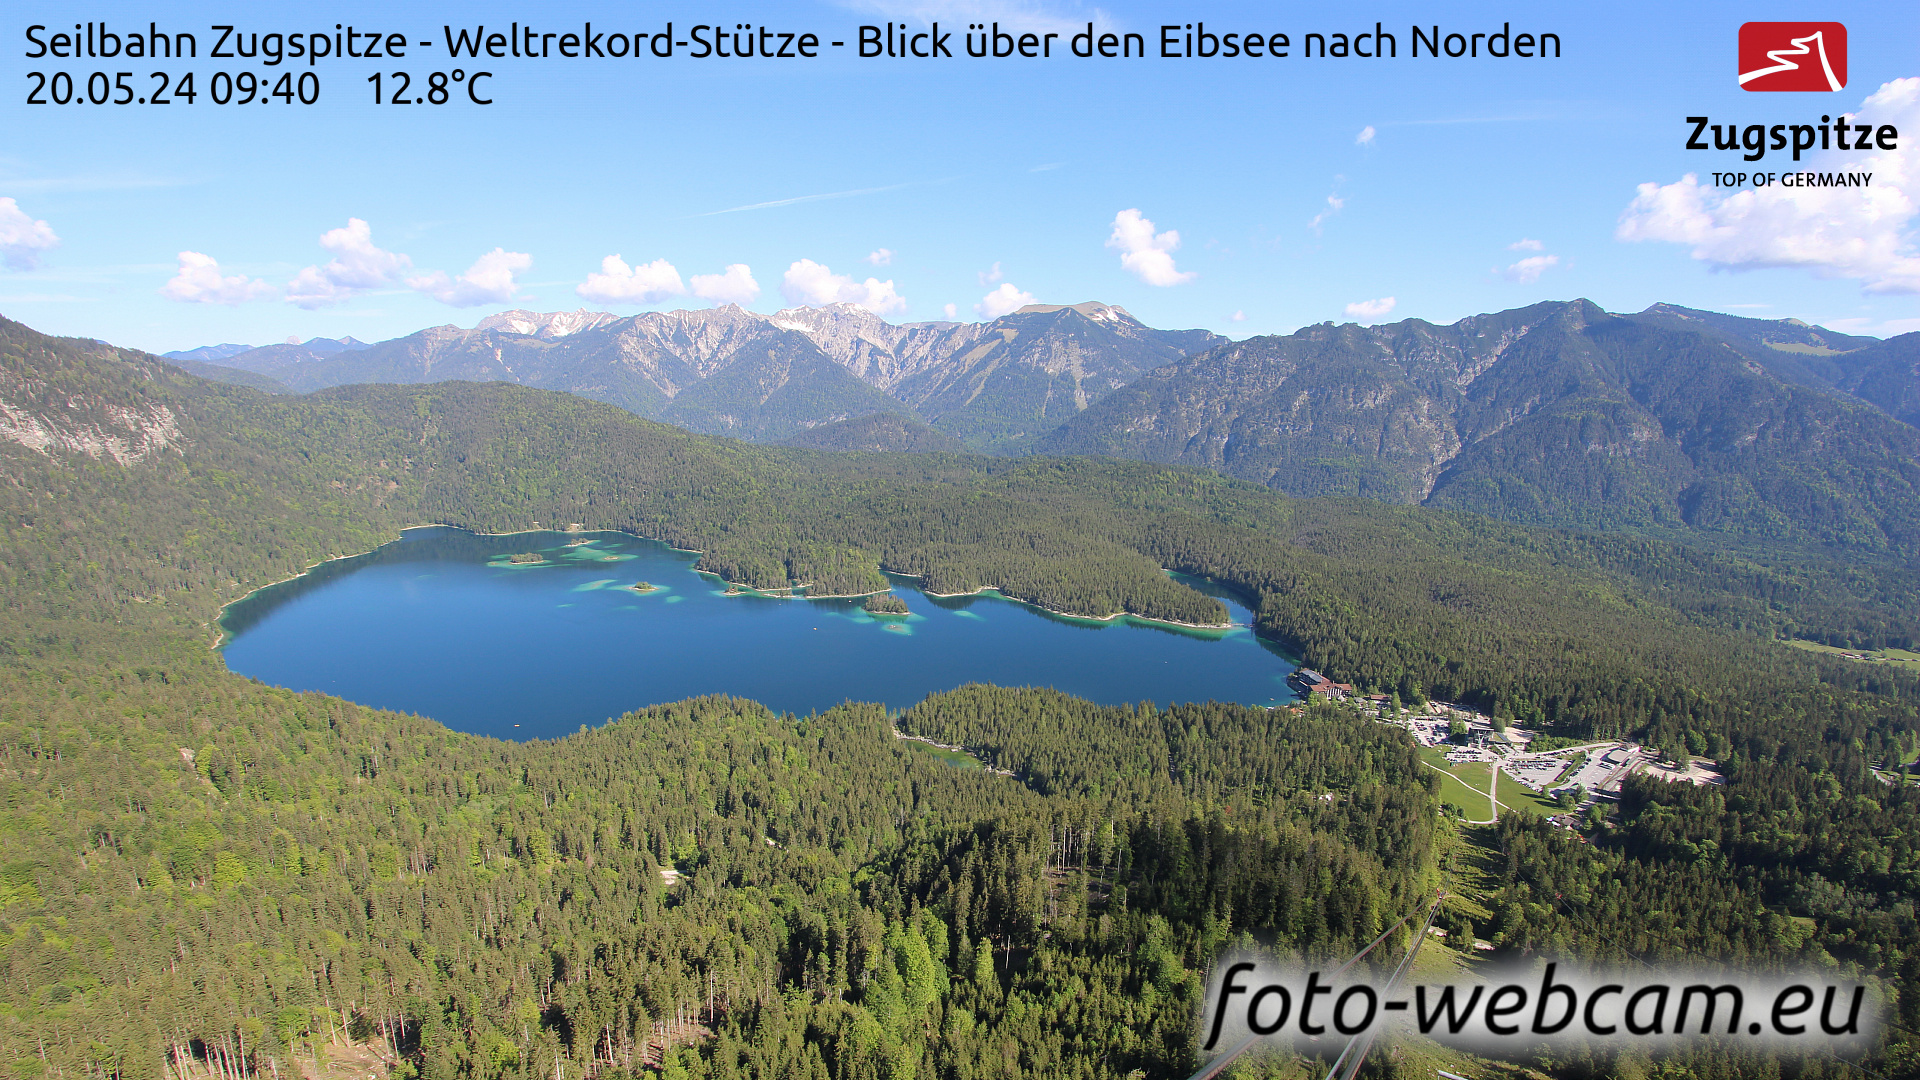 Zugspitze Ons. 09:49